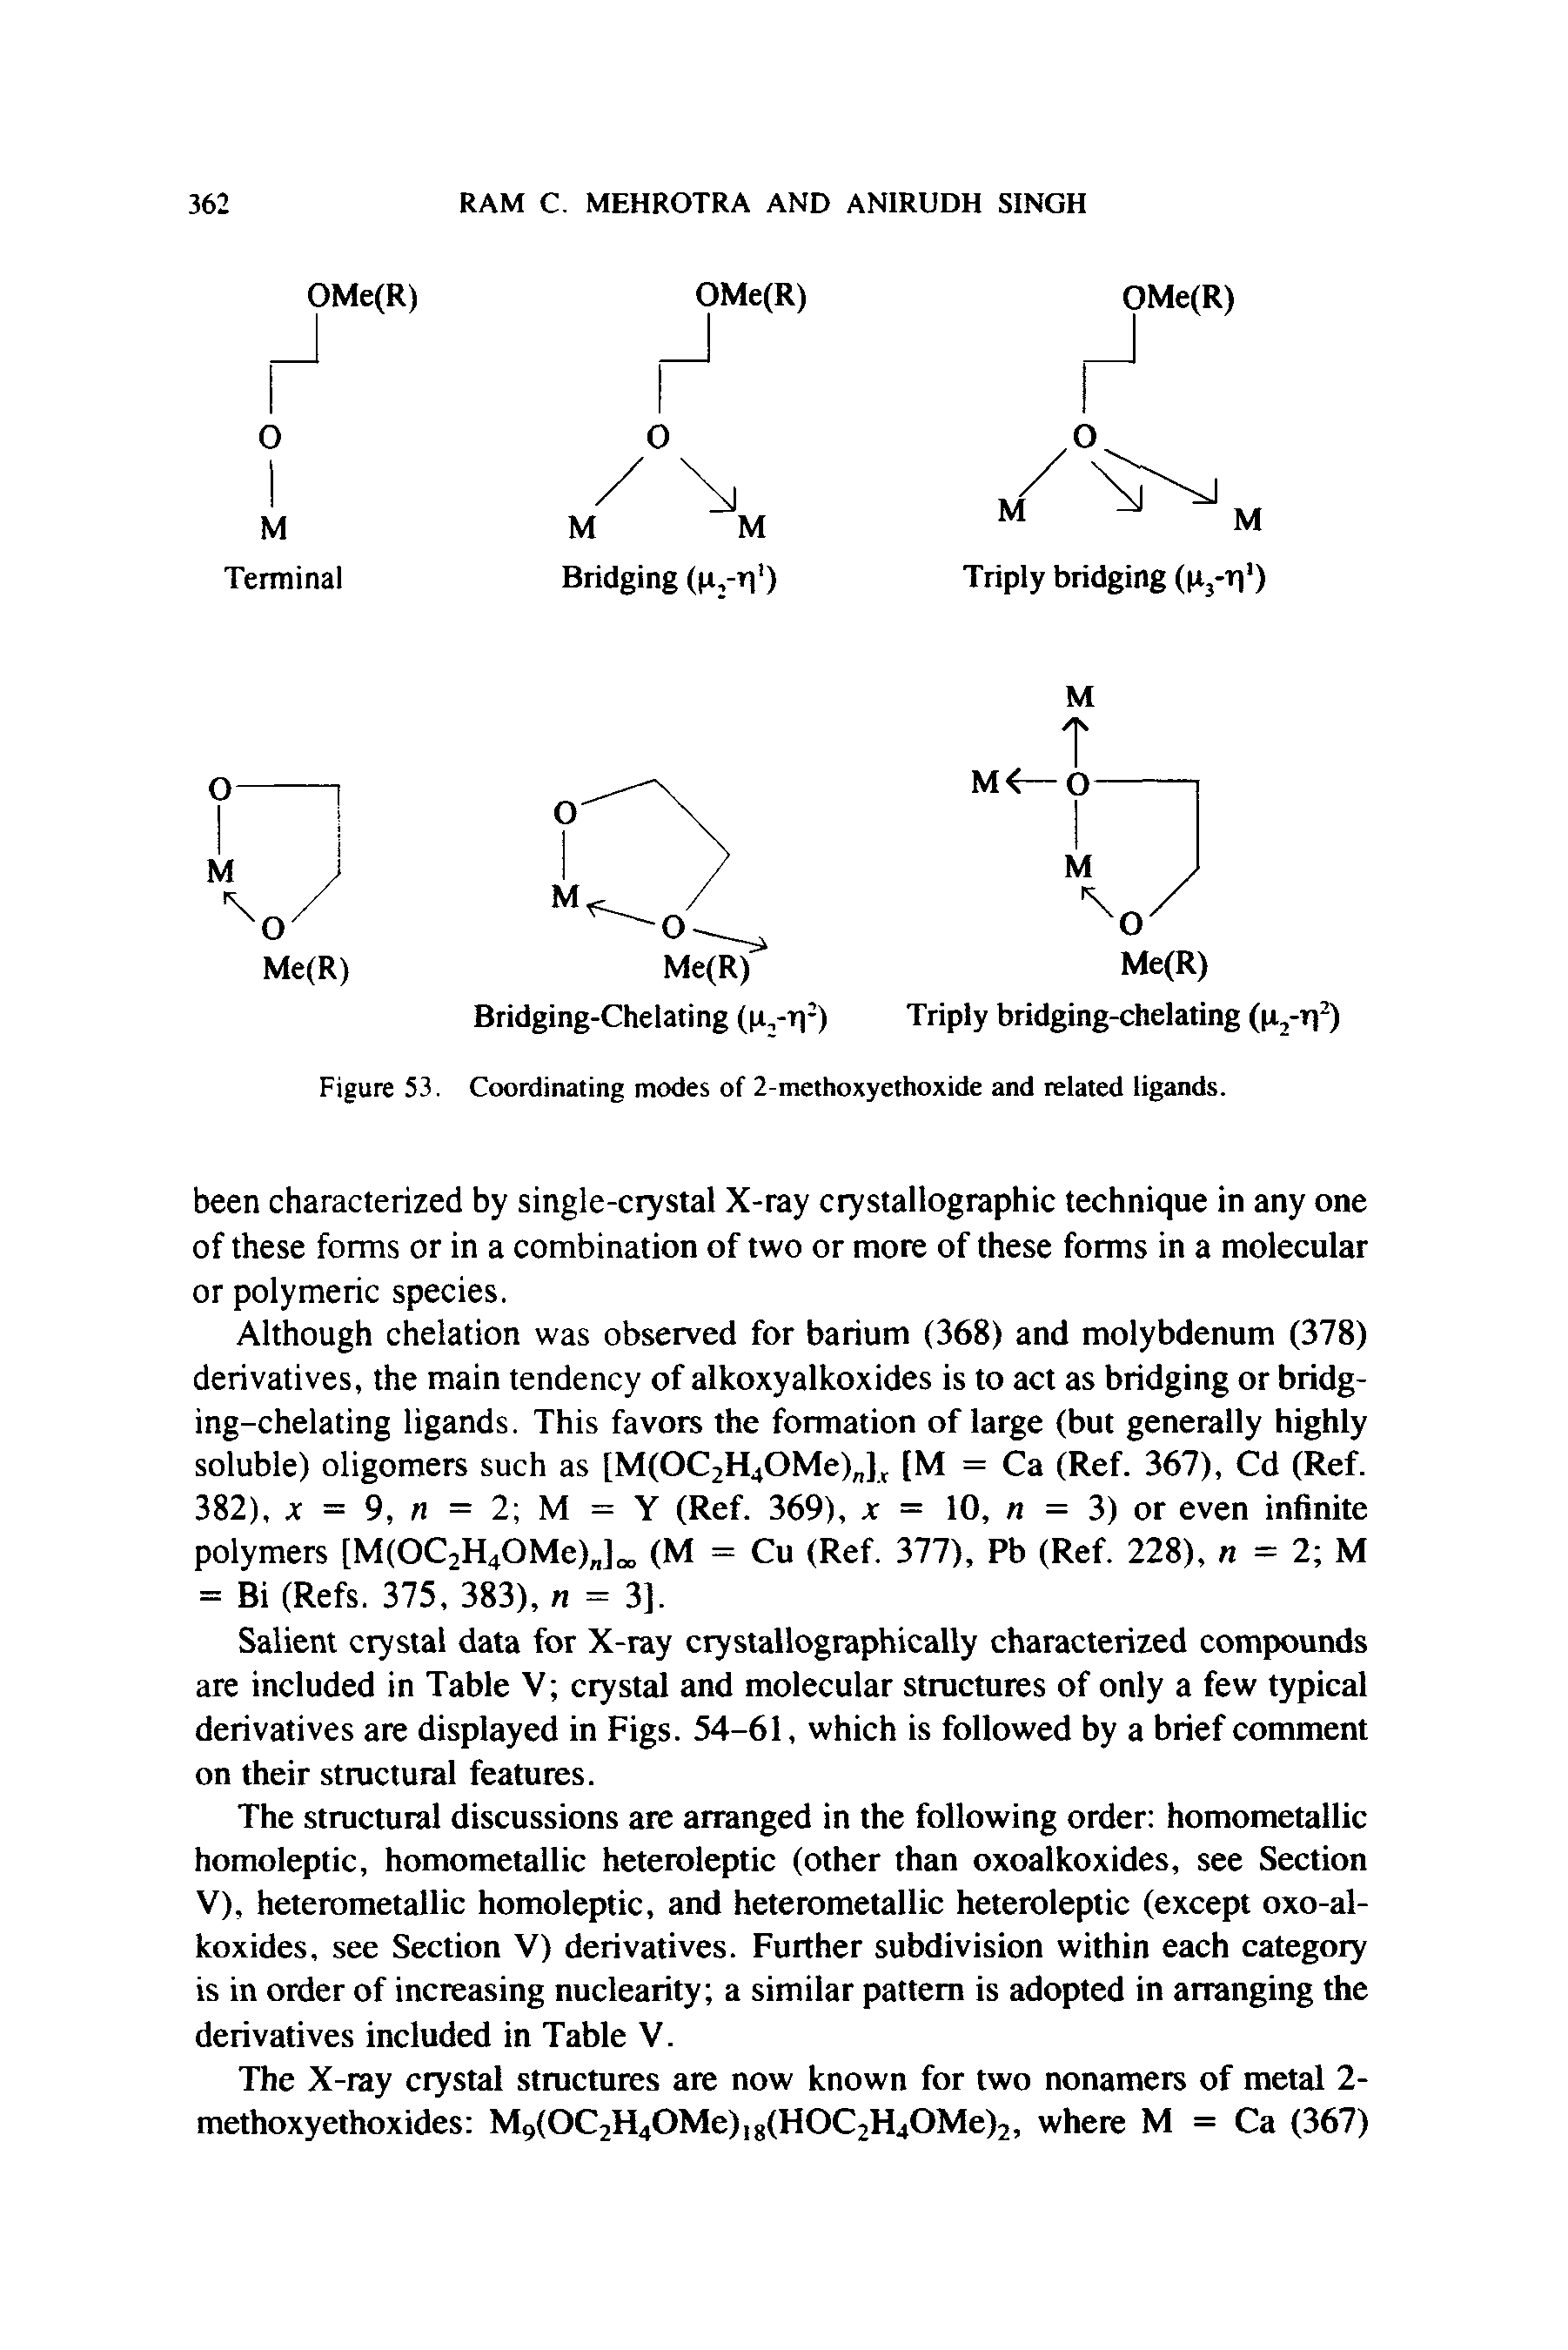 Figure 53. Coordinating modes of 2-methoxyethoxide and related ligands.